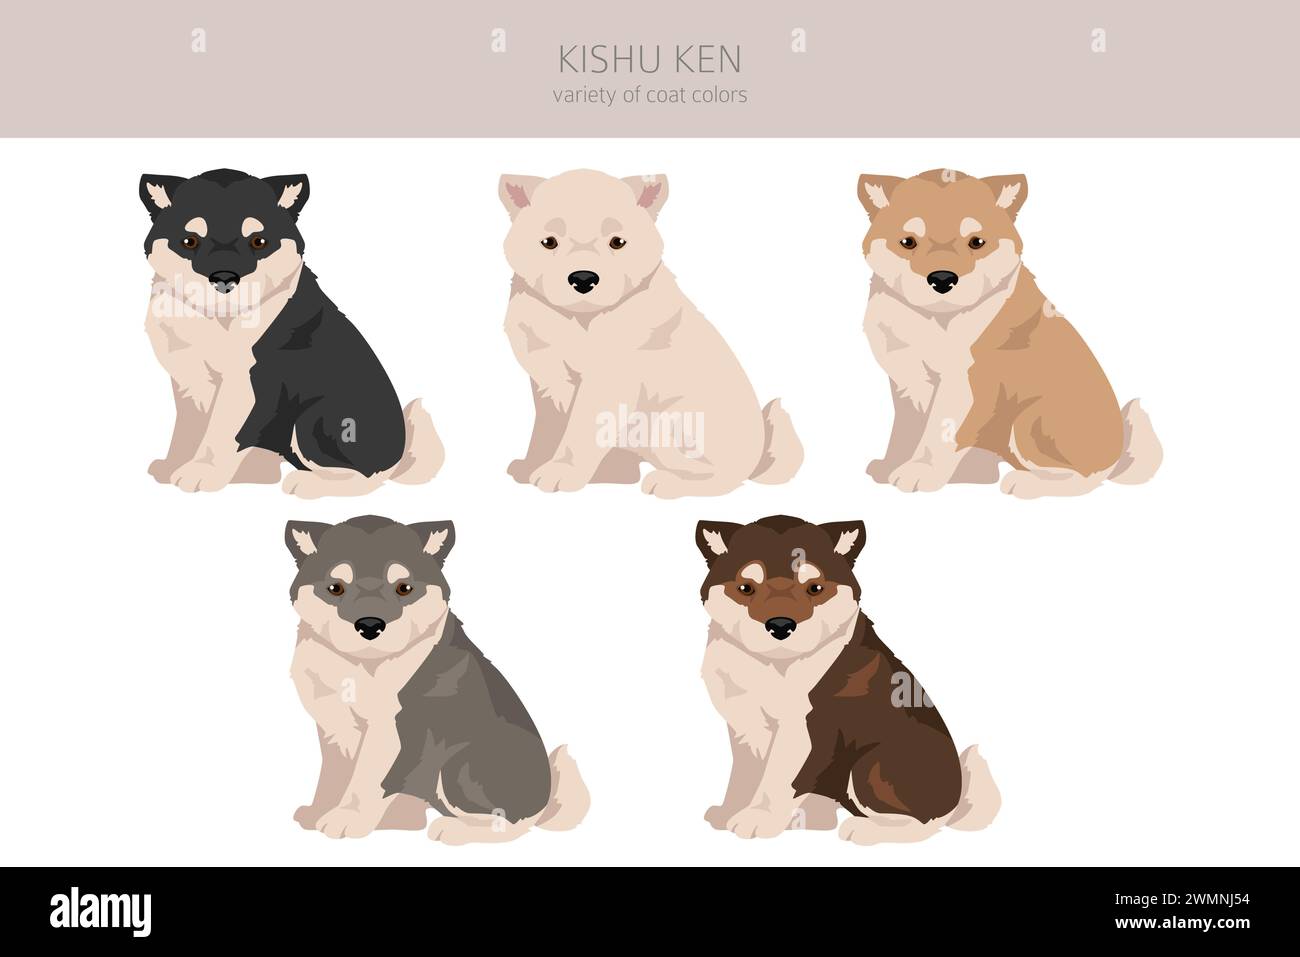 Kishu Ken puppy clipart. Different poses, coat colors set.  Vector illustration Stock Vector